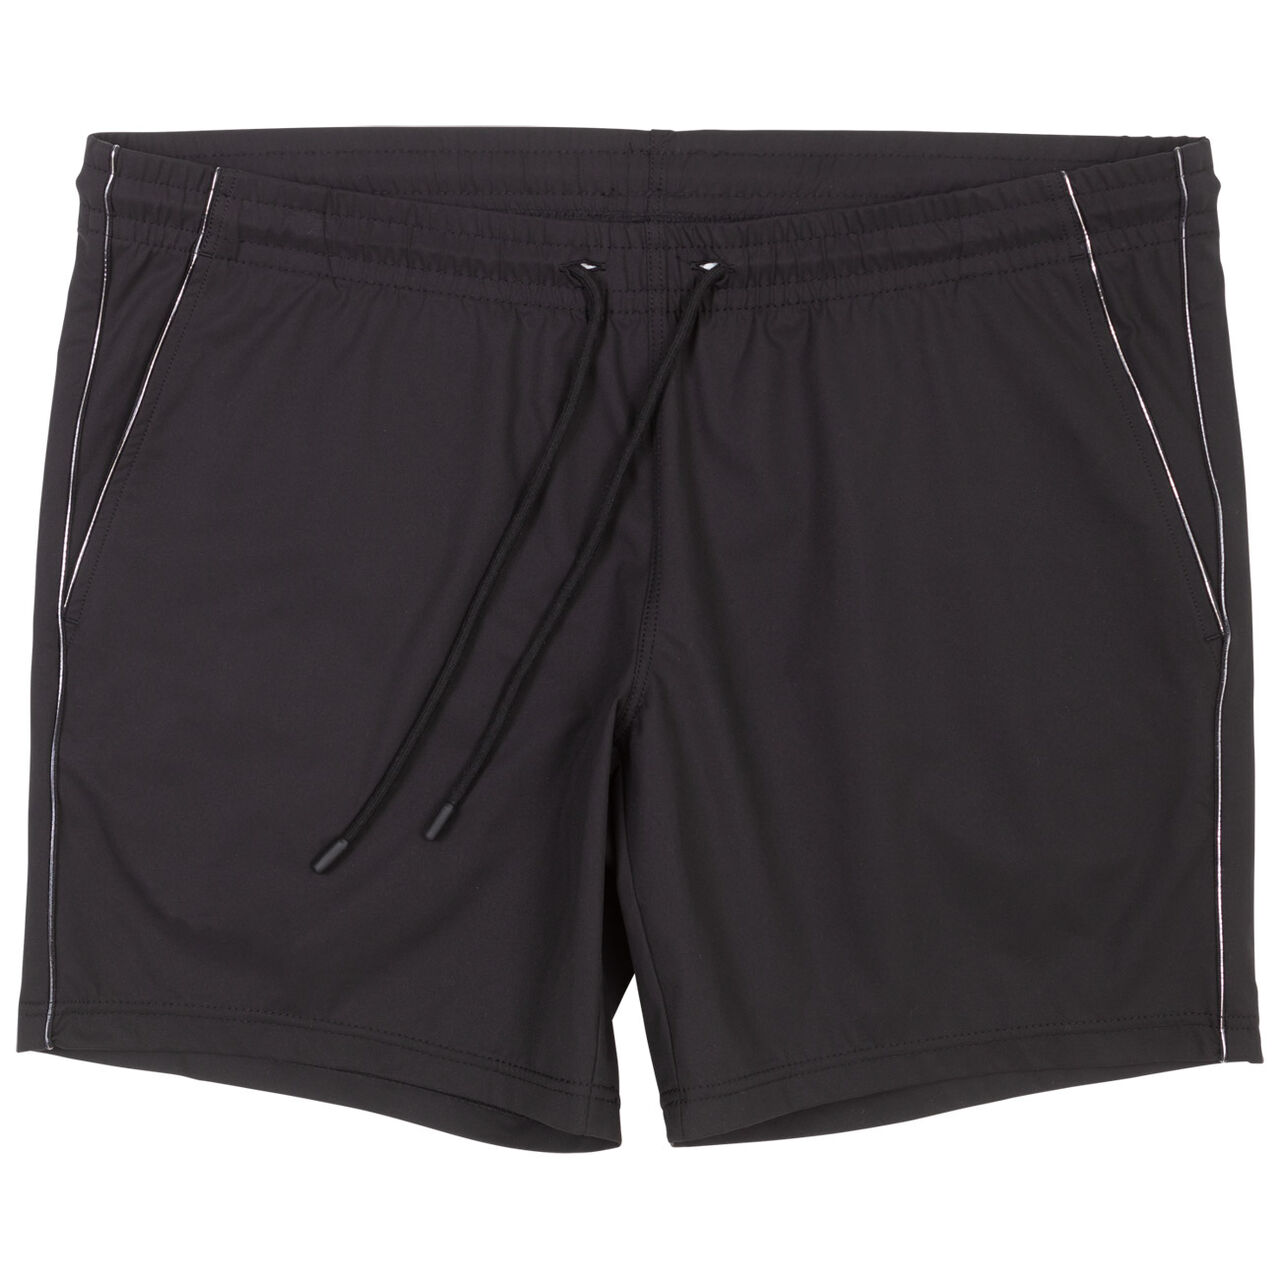 Tough Dry Shorts | Men's Underwear brand TOOT official website